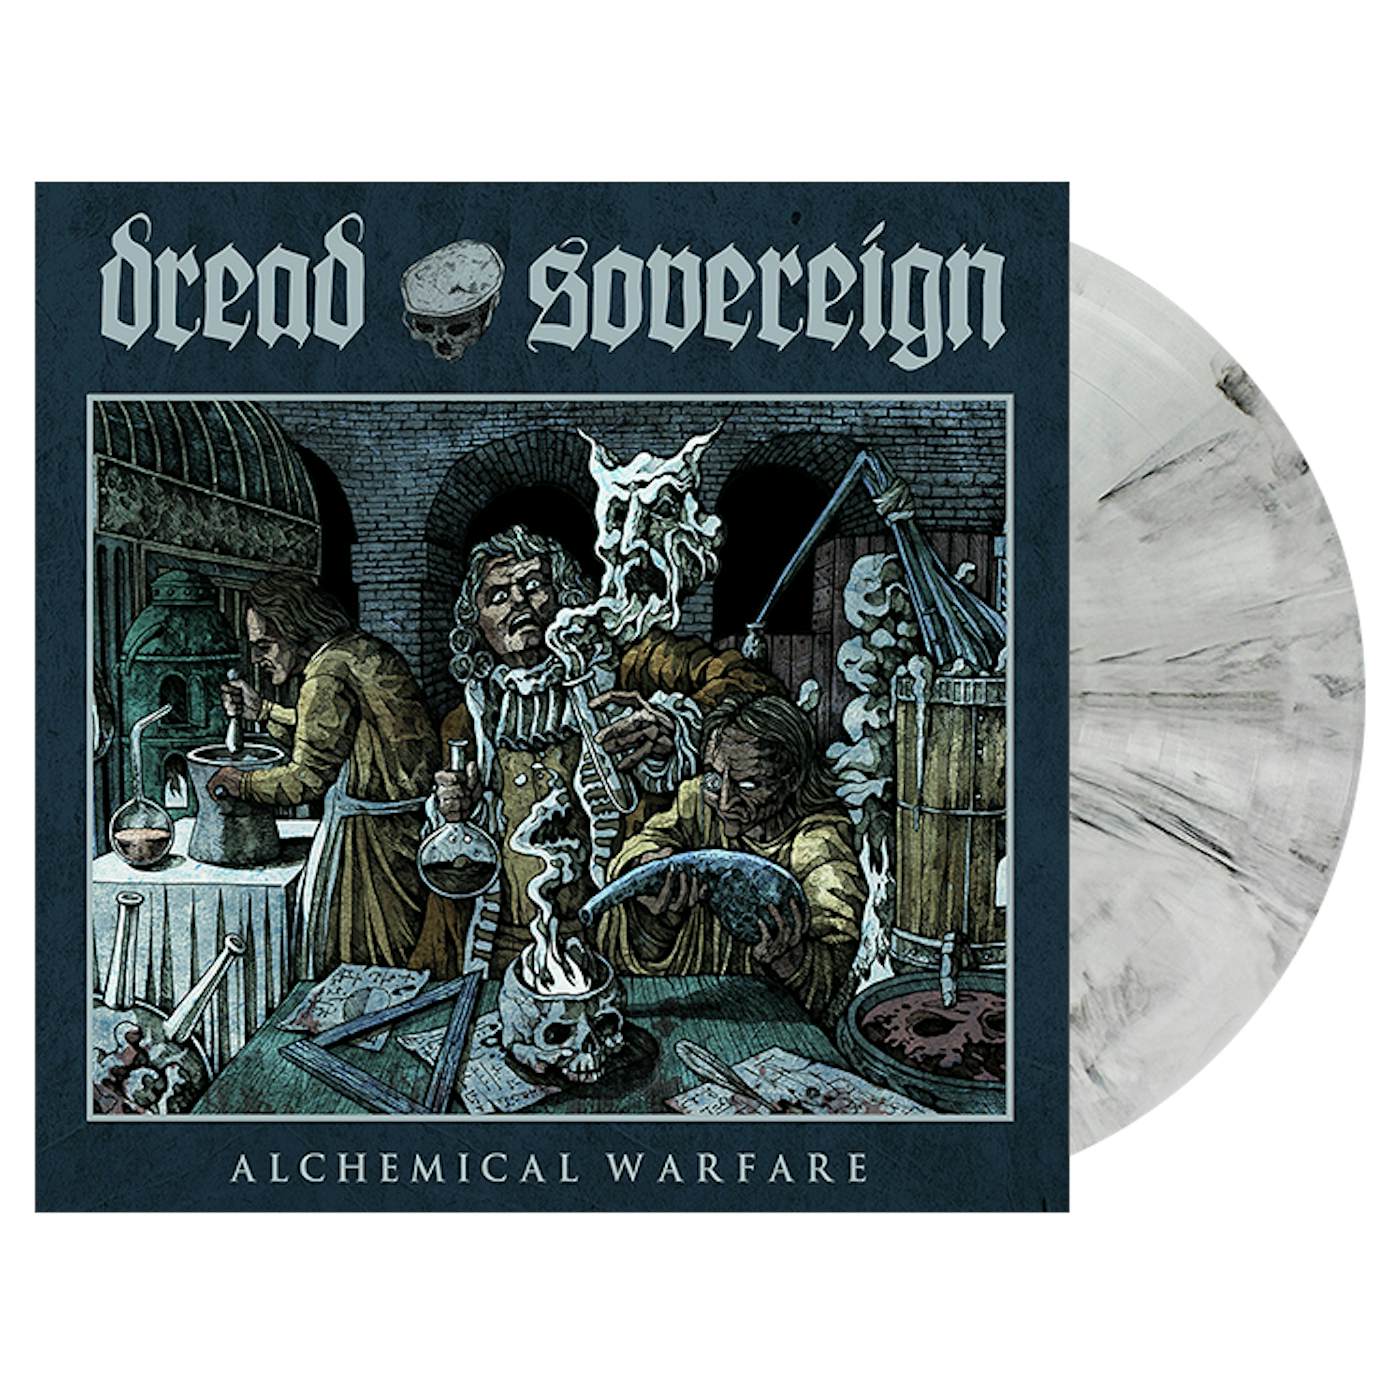 DREAD SOVEREIGN - 'Alchemical Warfare' LP (Vinyl)